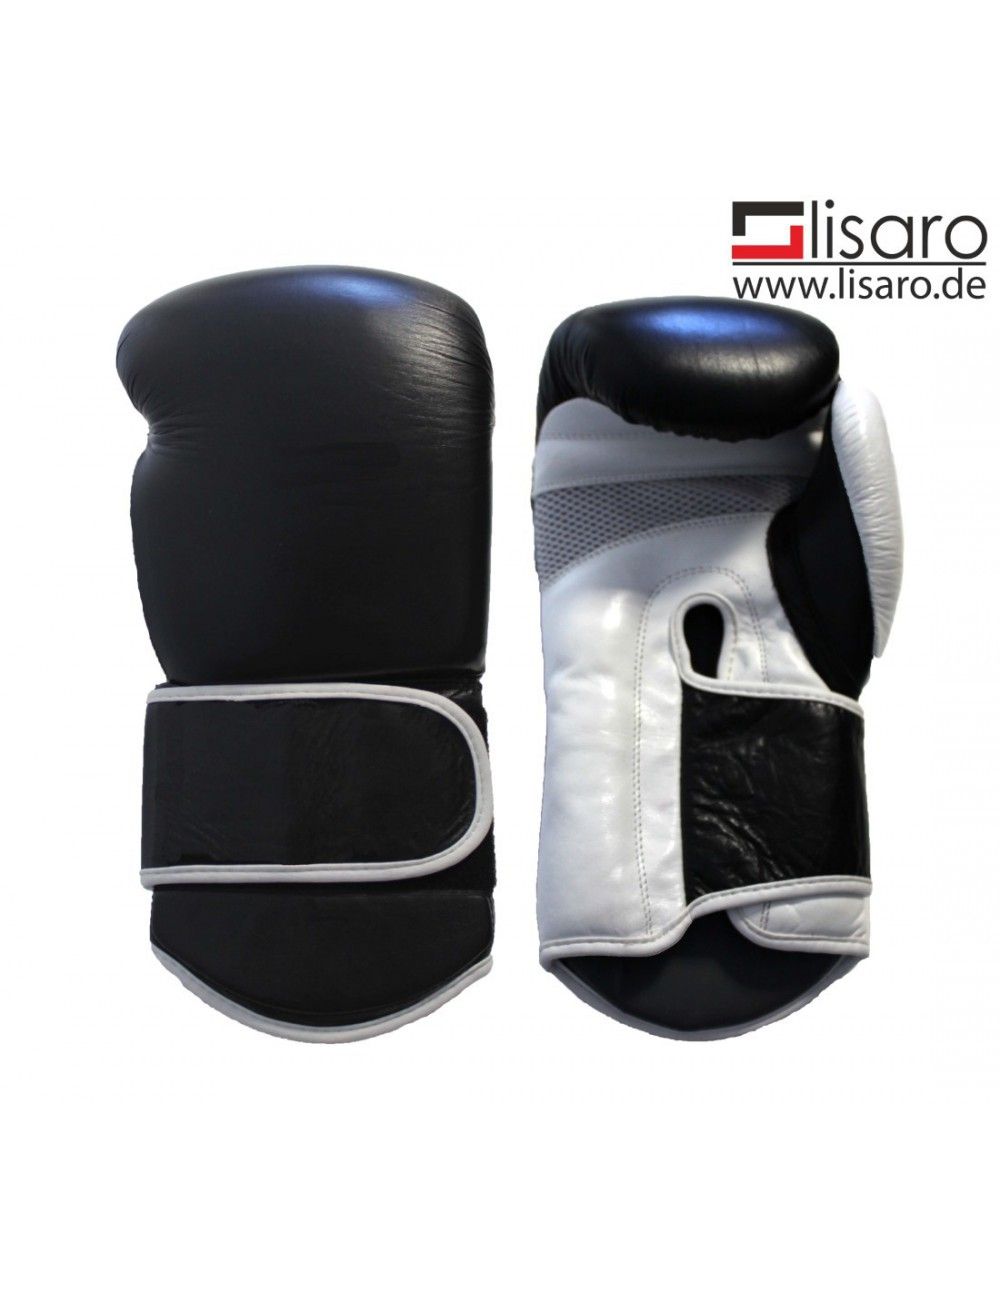 Performance Boxhandschuhe aus echtem Leder  Farbe schwarz-weiß - 1